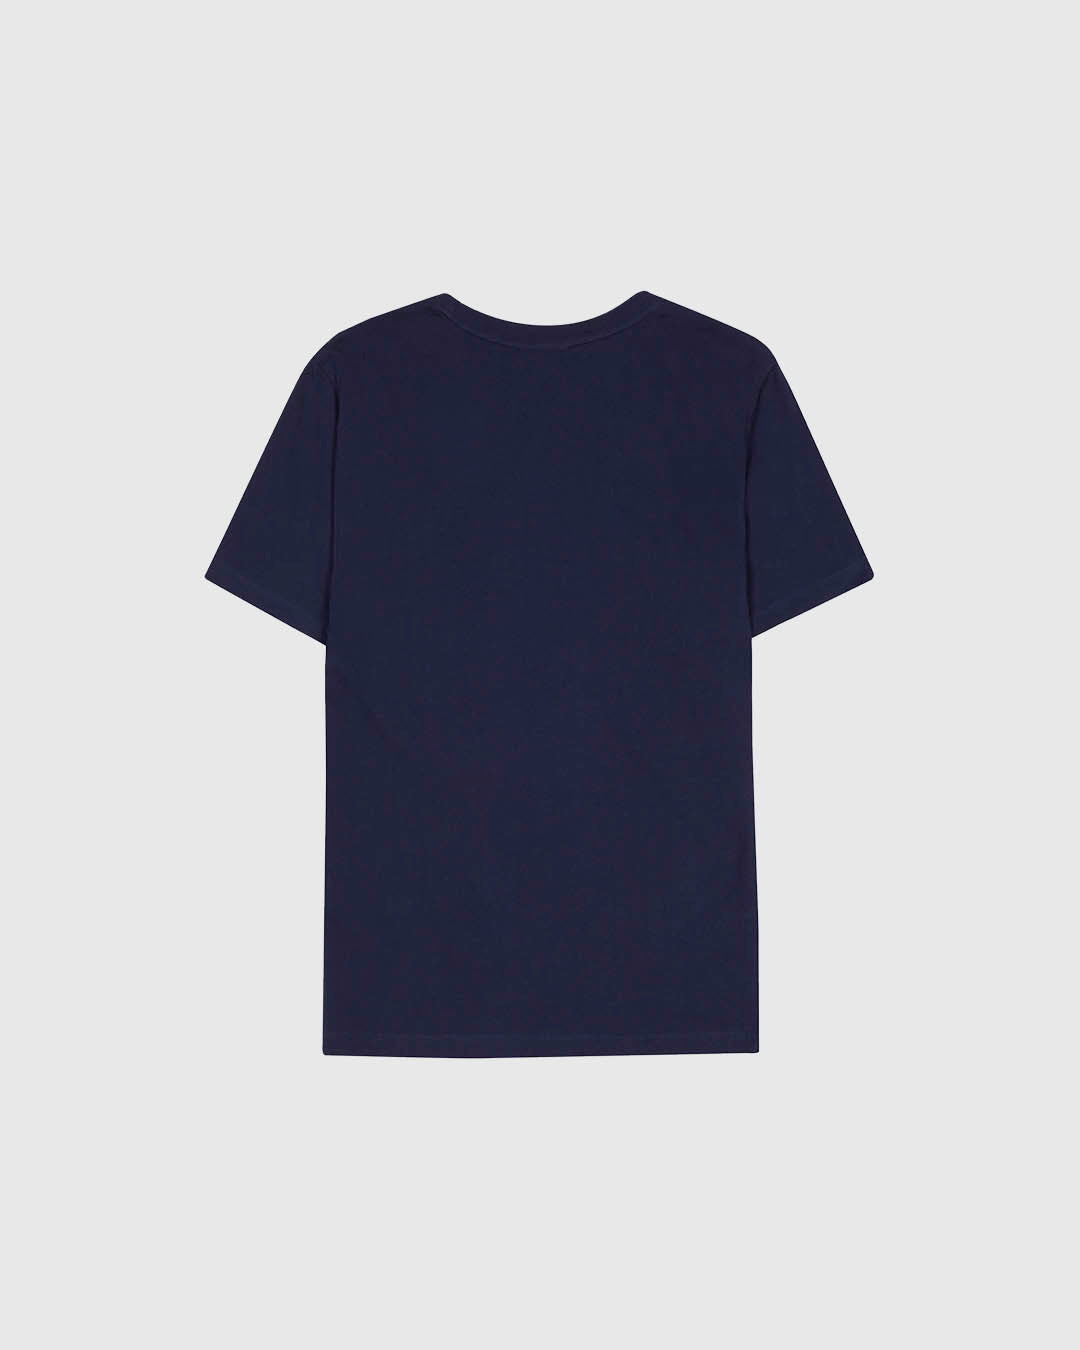 PFC: 002-1 - Men's T-Shirt - Navy